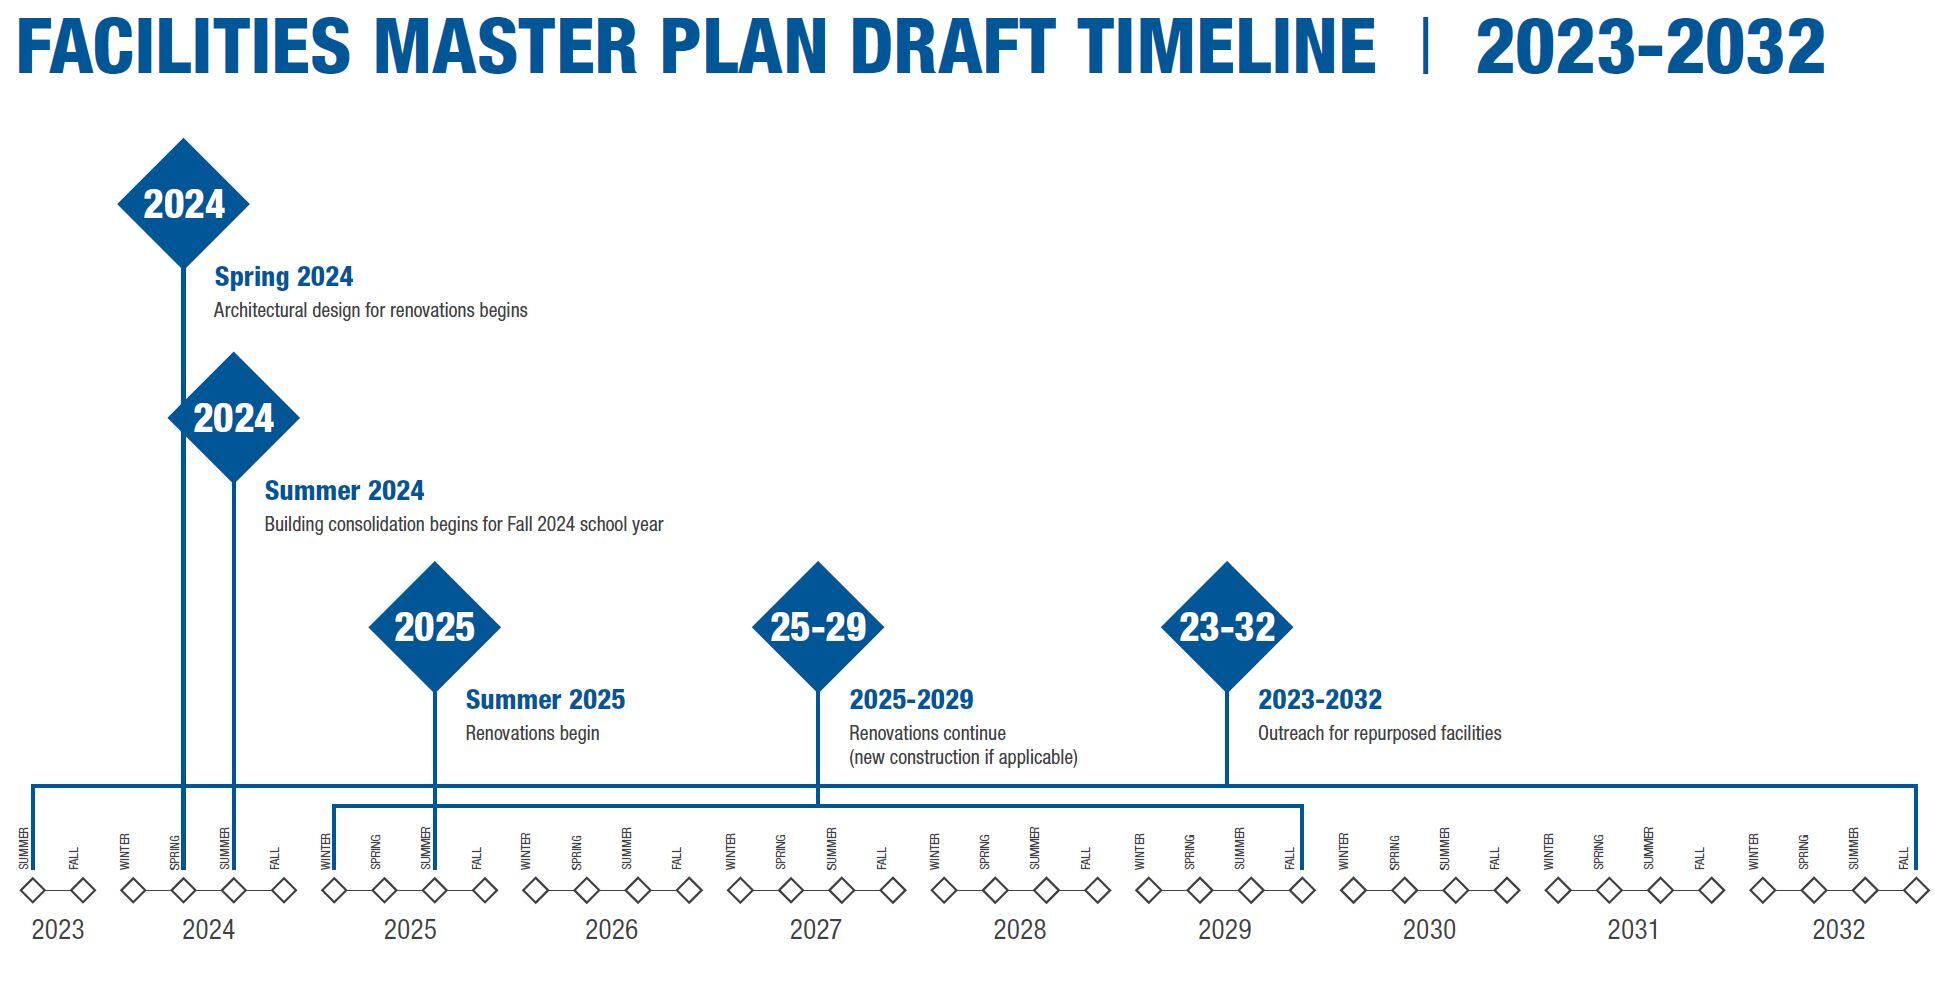 Facilities Master Plan Draft Timeline 2023-2032